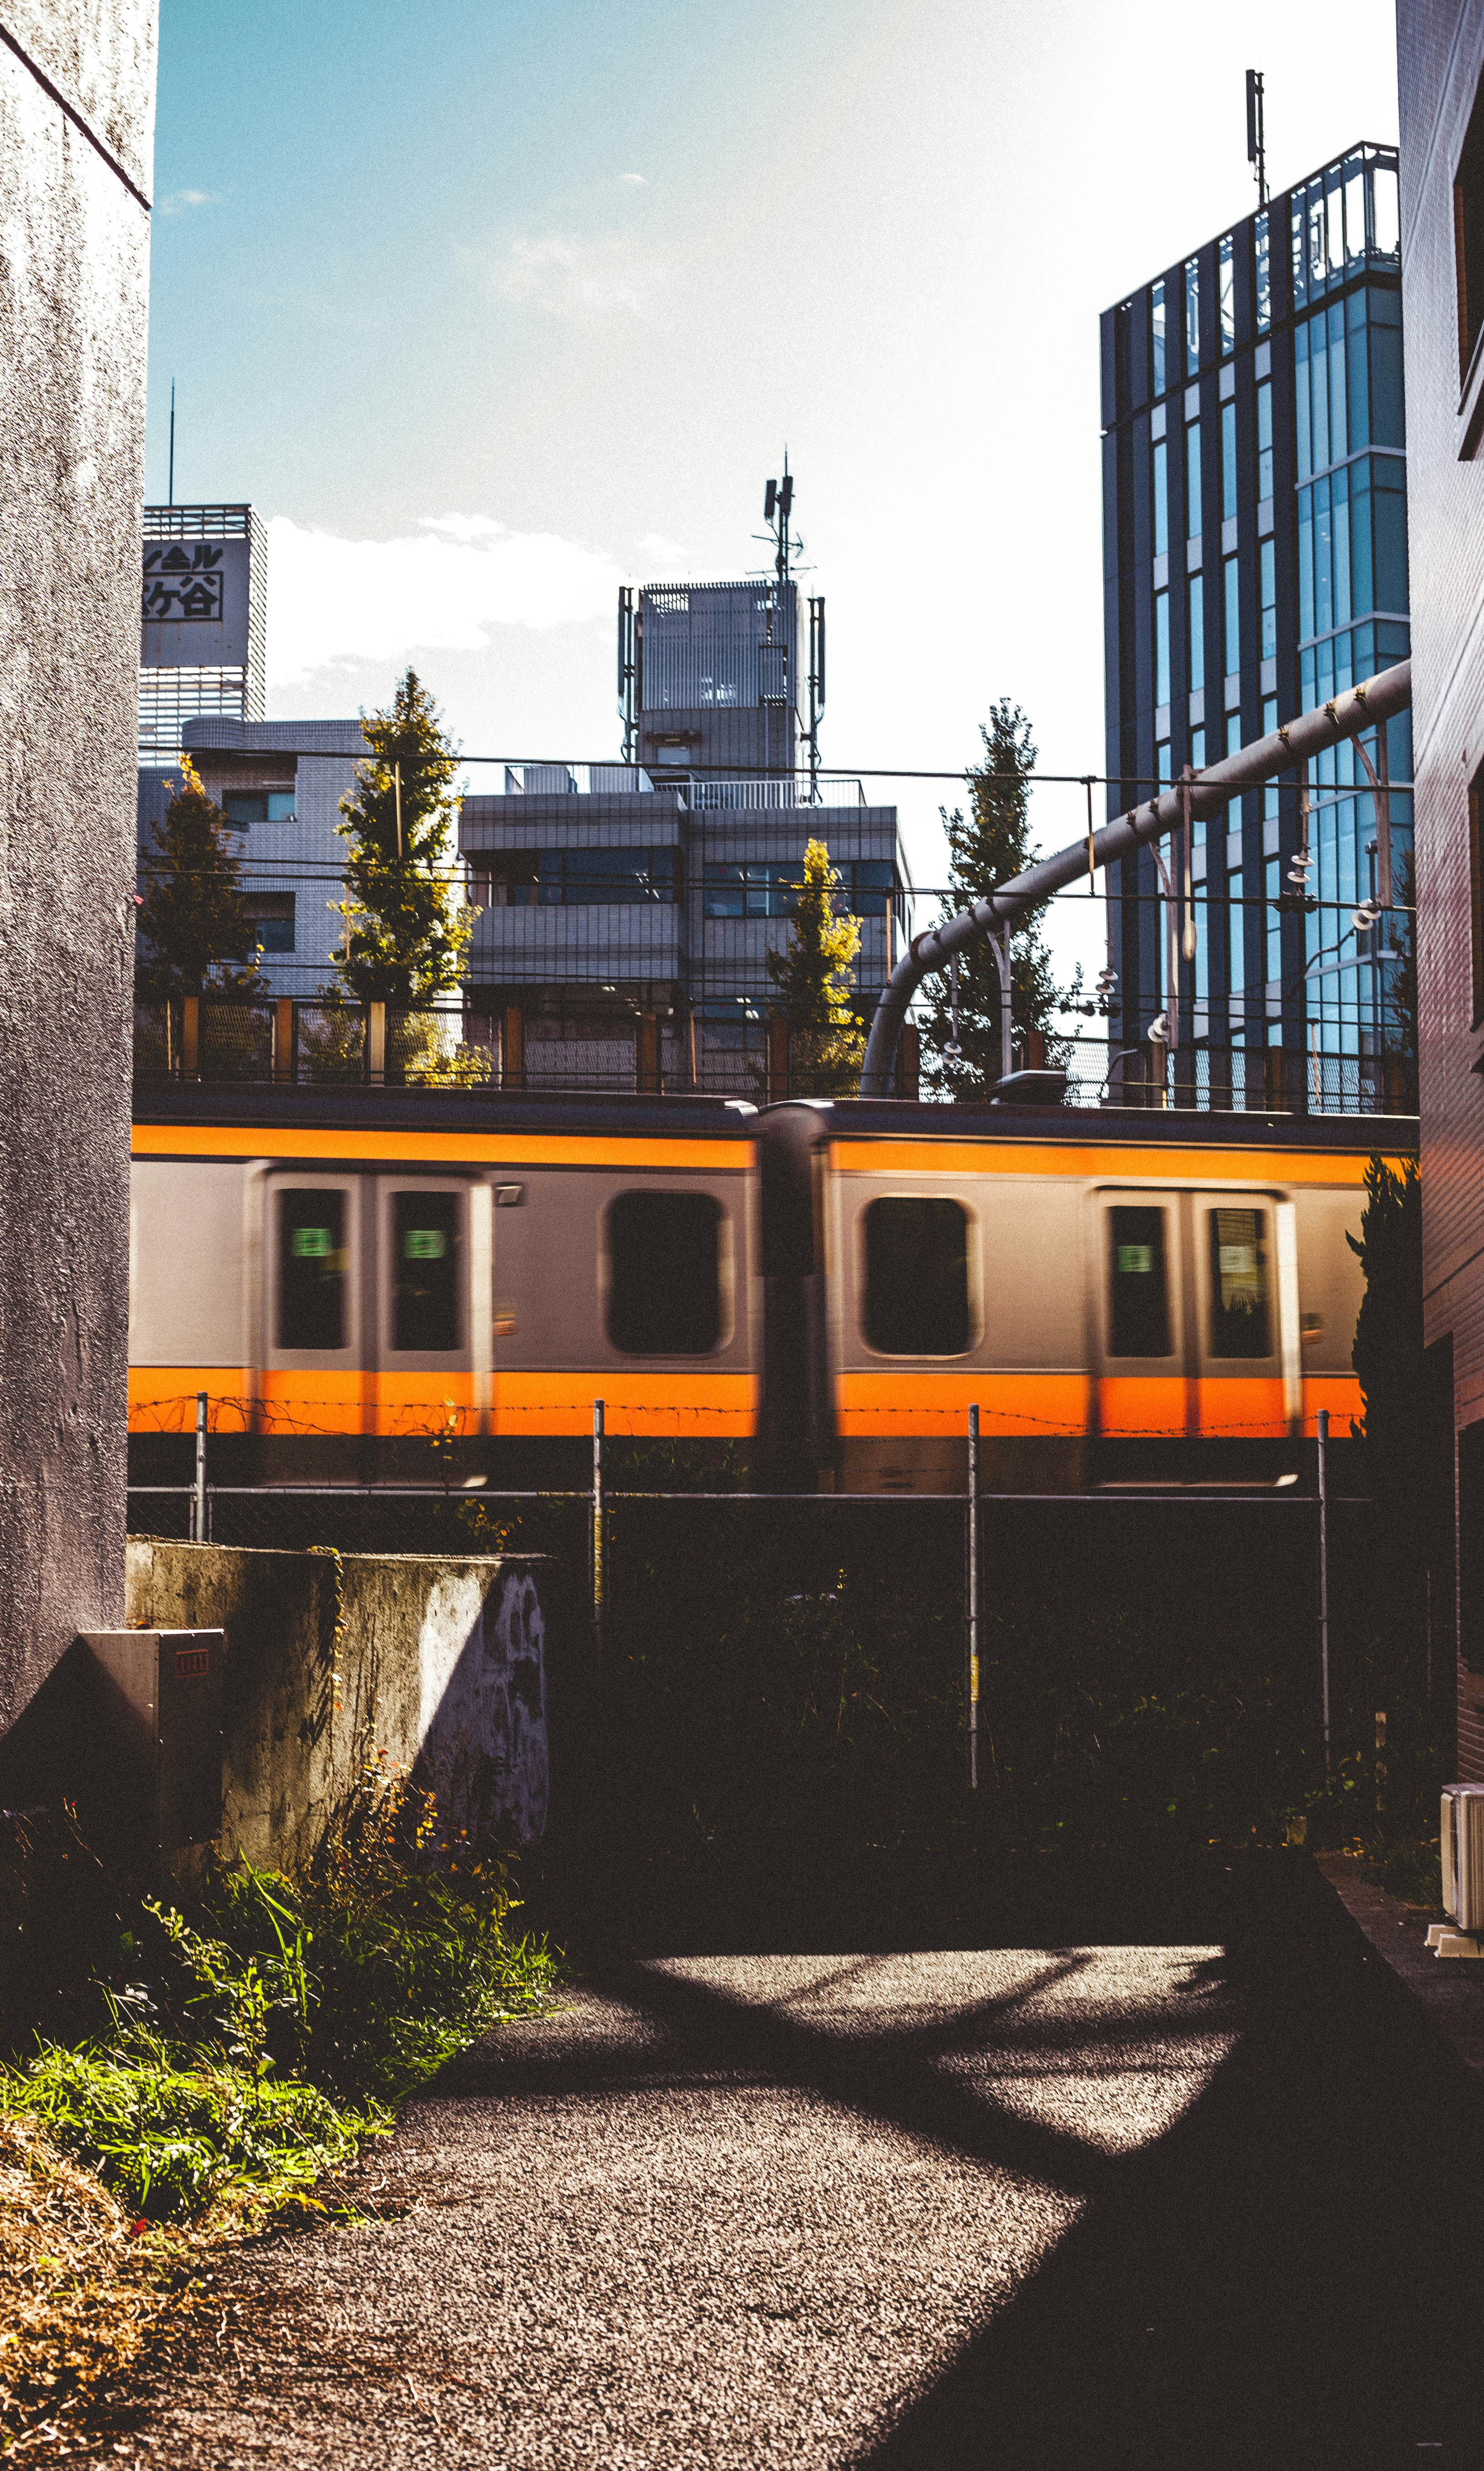 grey and orange train during daytime